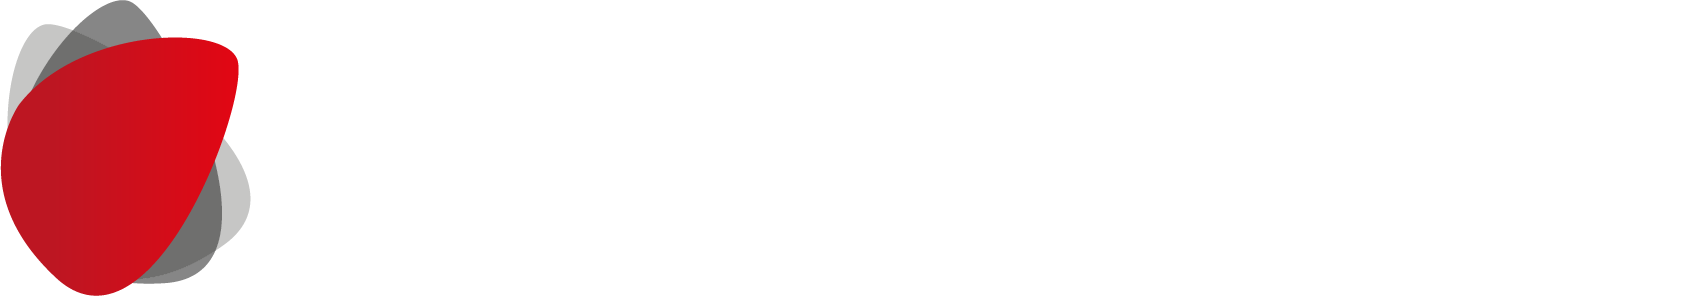 logo fakosign